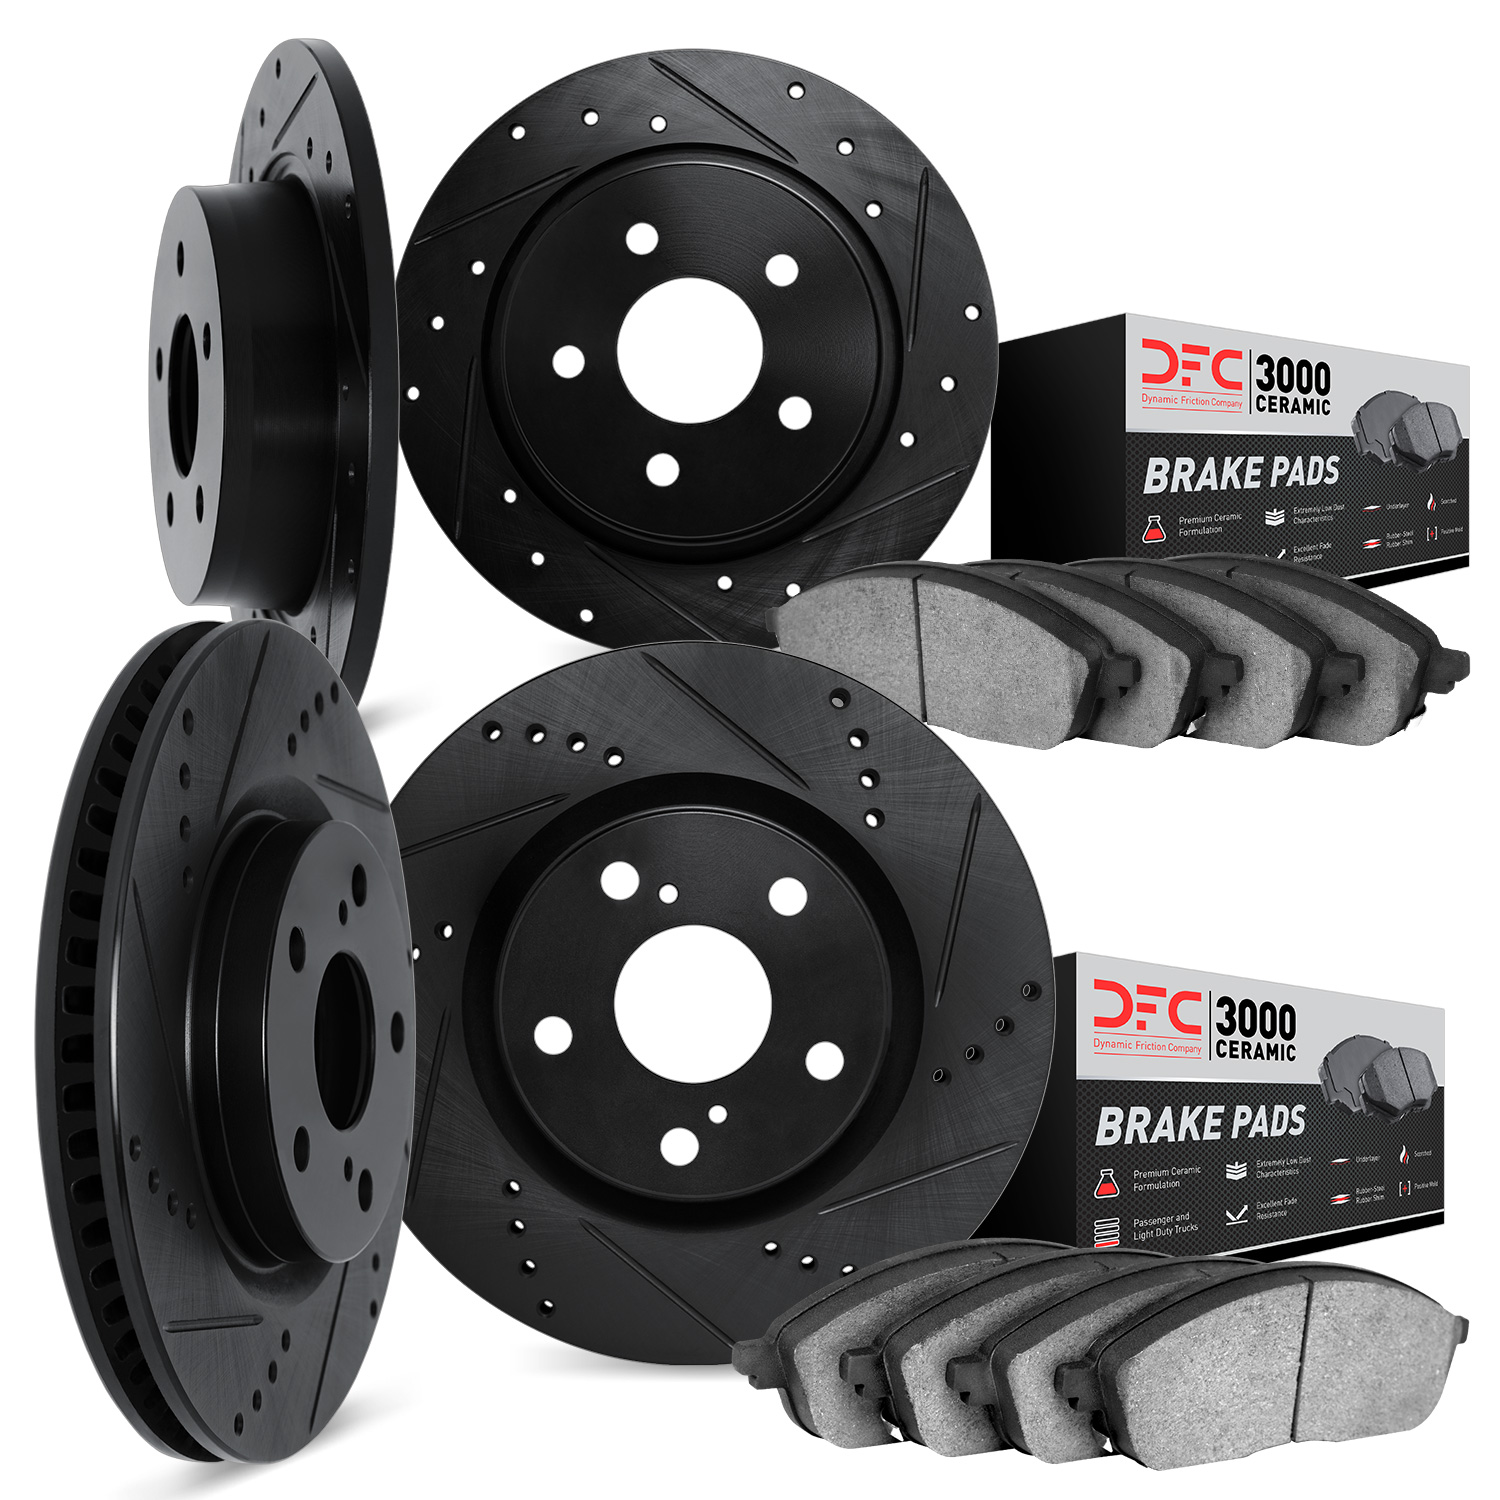 8304-54118 Drilled/Slotted Brake Rotors with 3000-Series Ceramic Brake Pads Kit [Black], 2015-2020 Ford/Lincoln/Mercury/Mazda, P